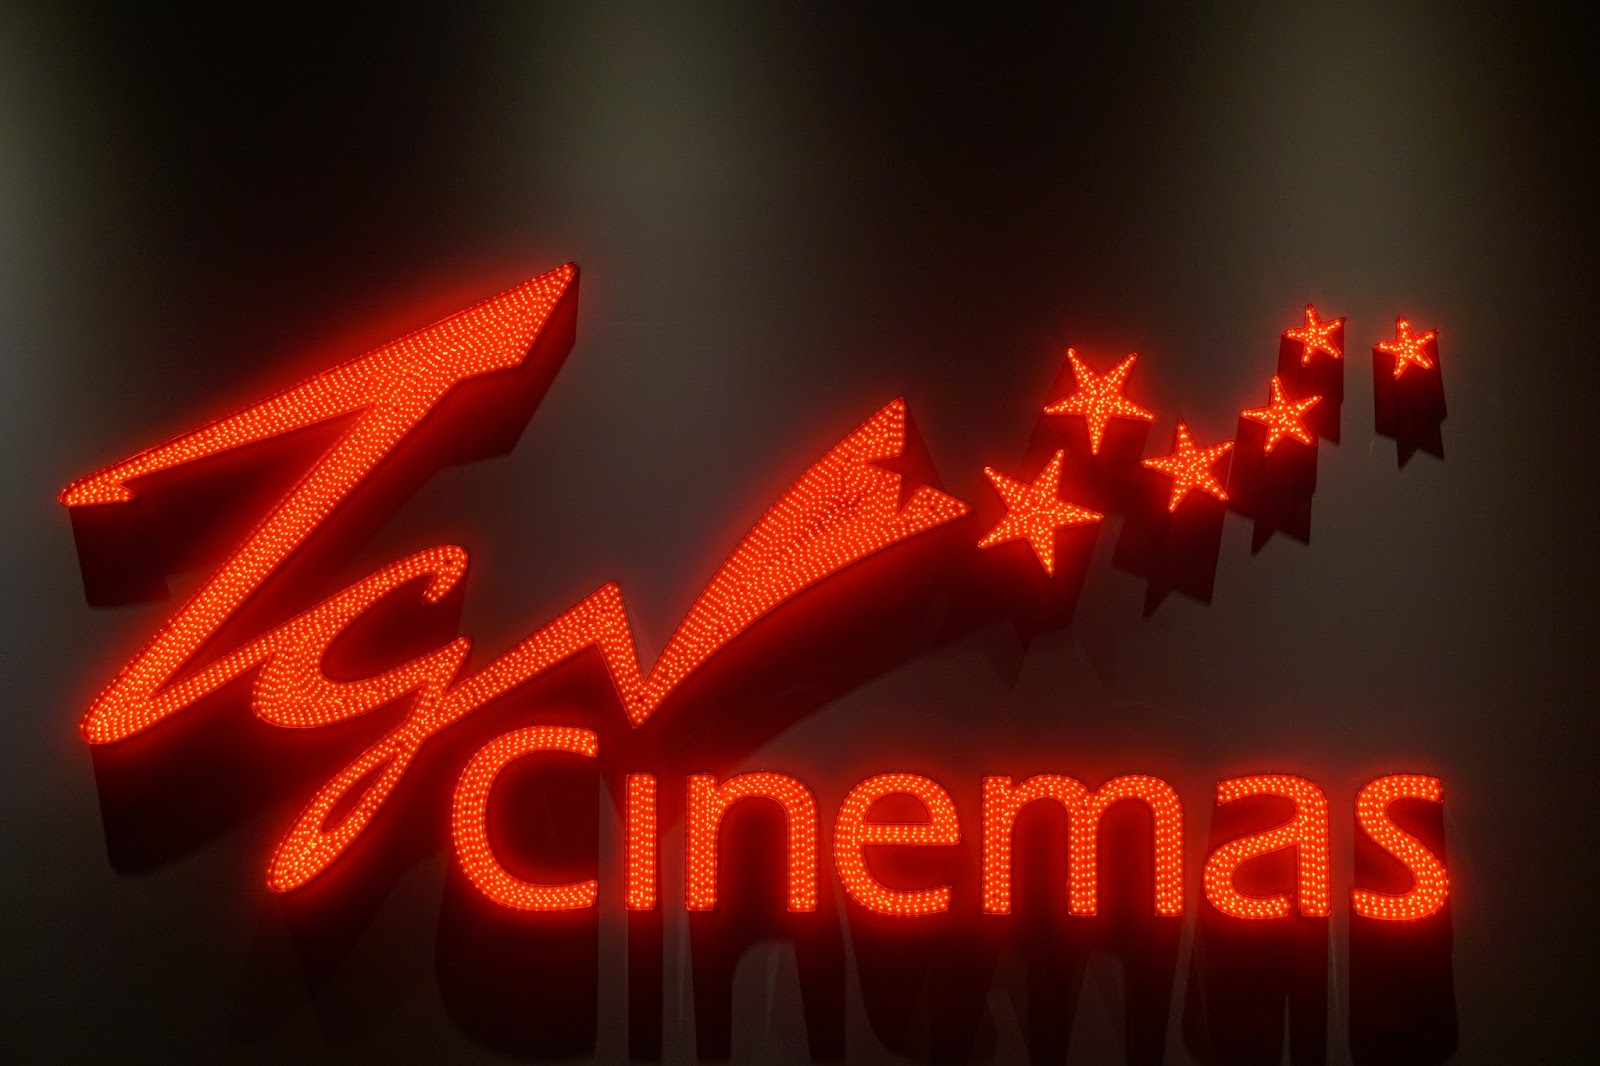 Tgv Cinemas - Aeon Klebang / Tgv Cinemas Cinema Details - Aeon mall